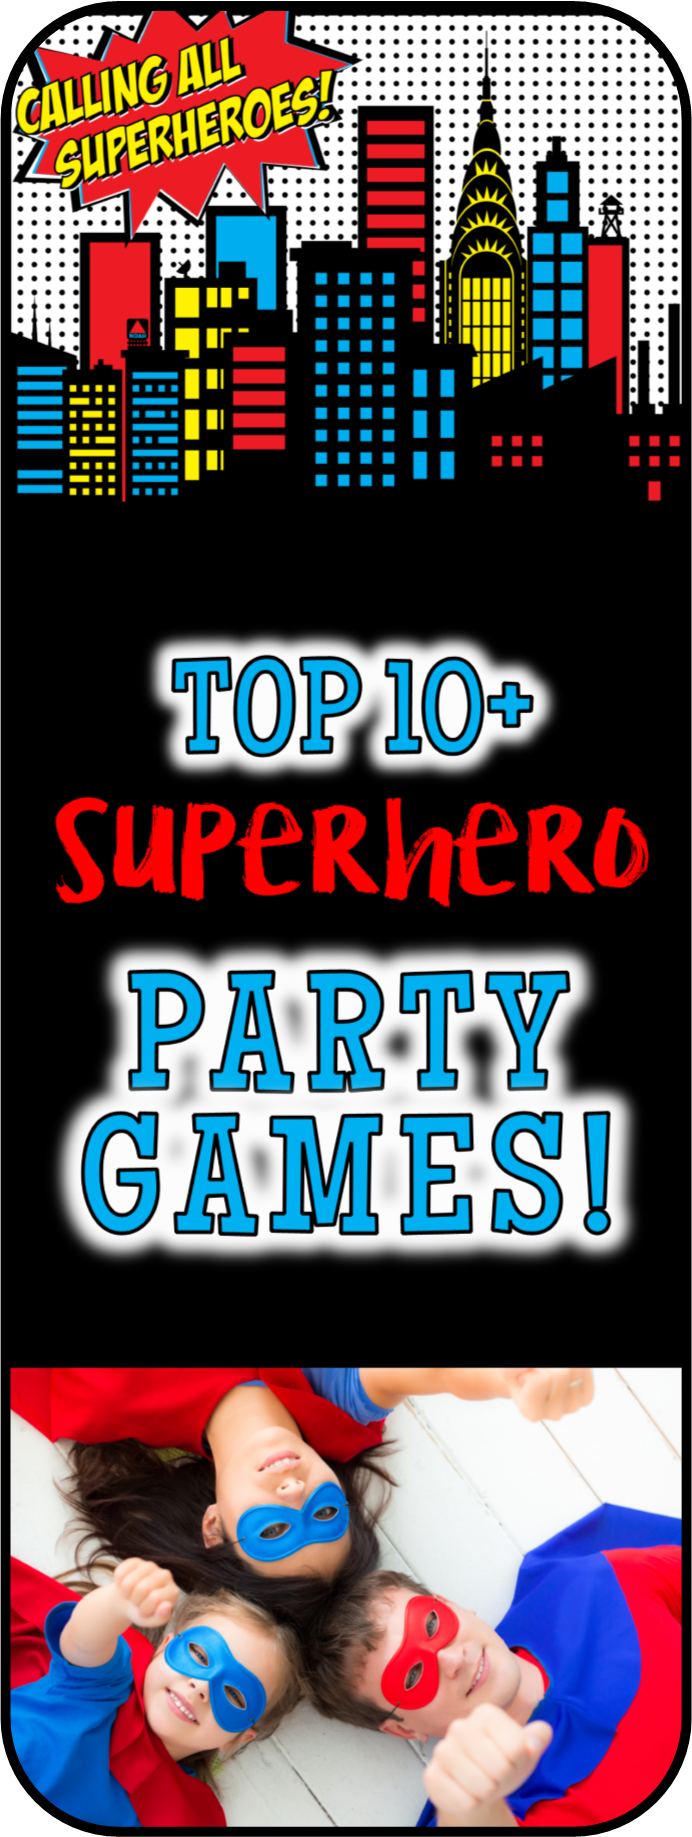 Top Superhero Party Games And Superhero Activities